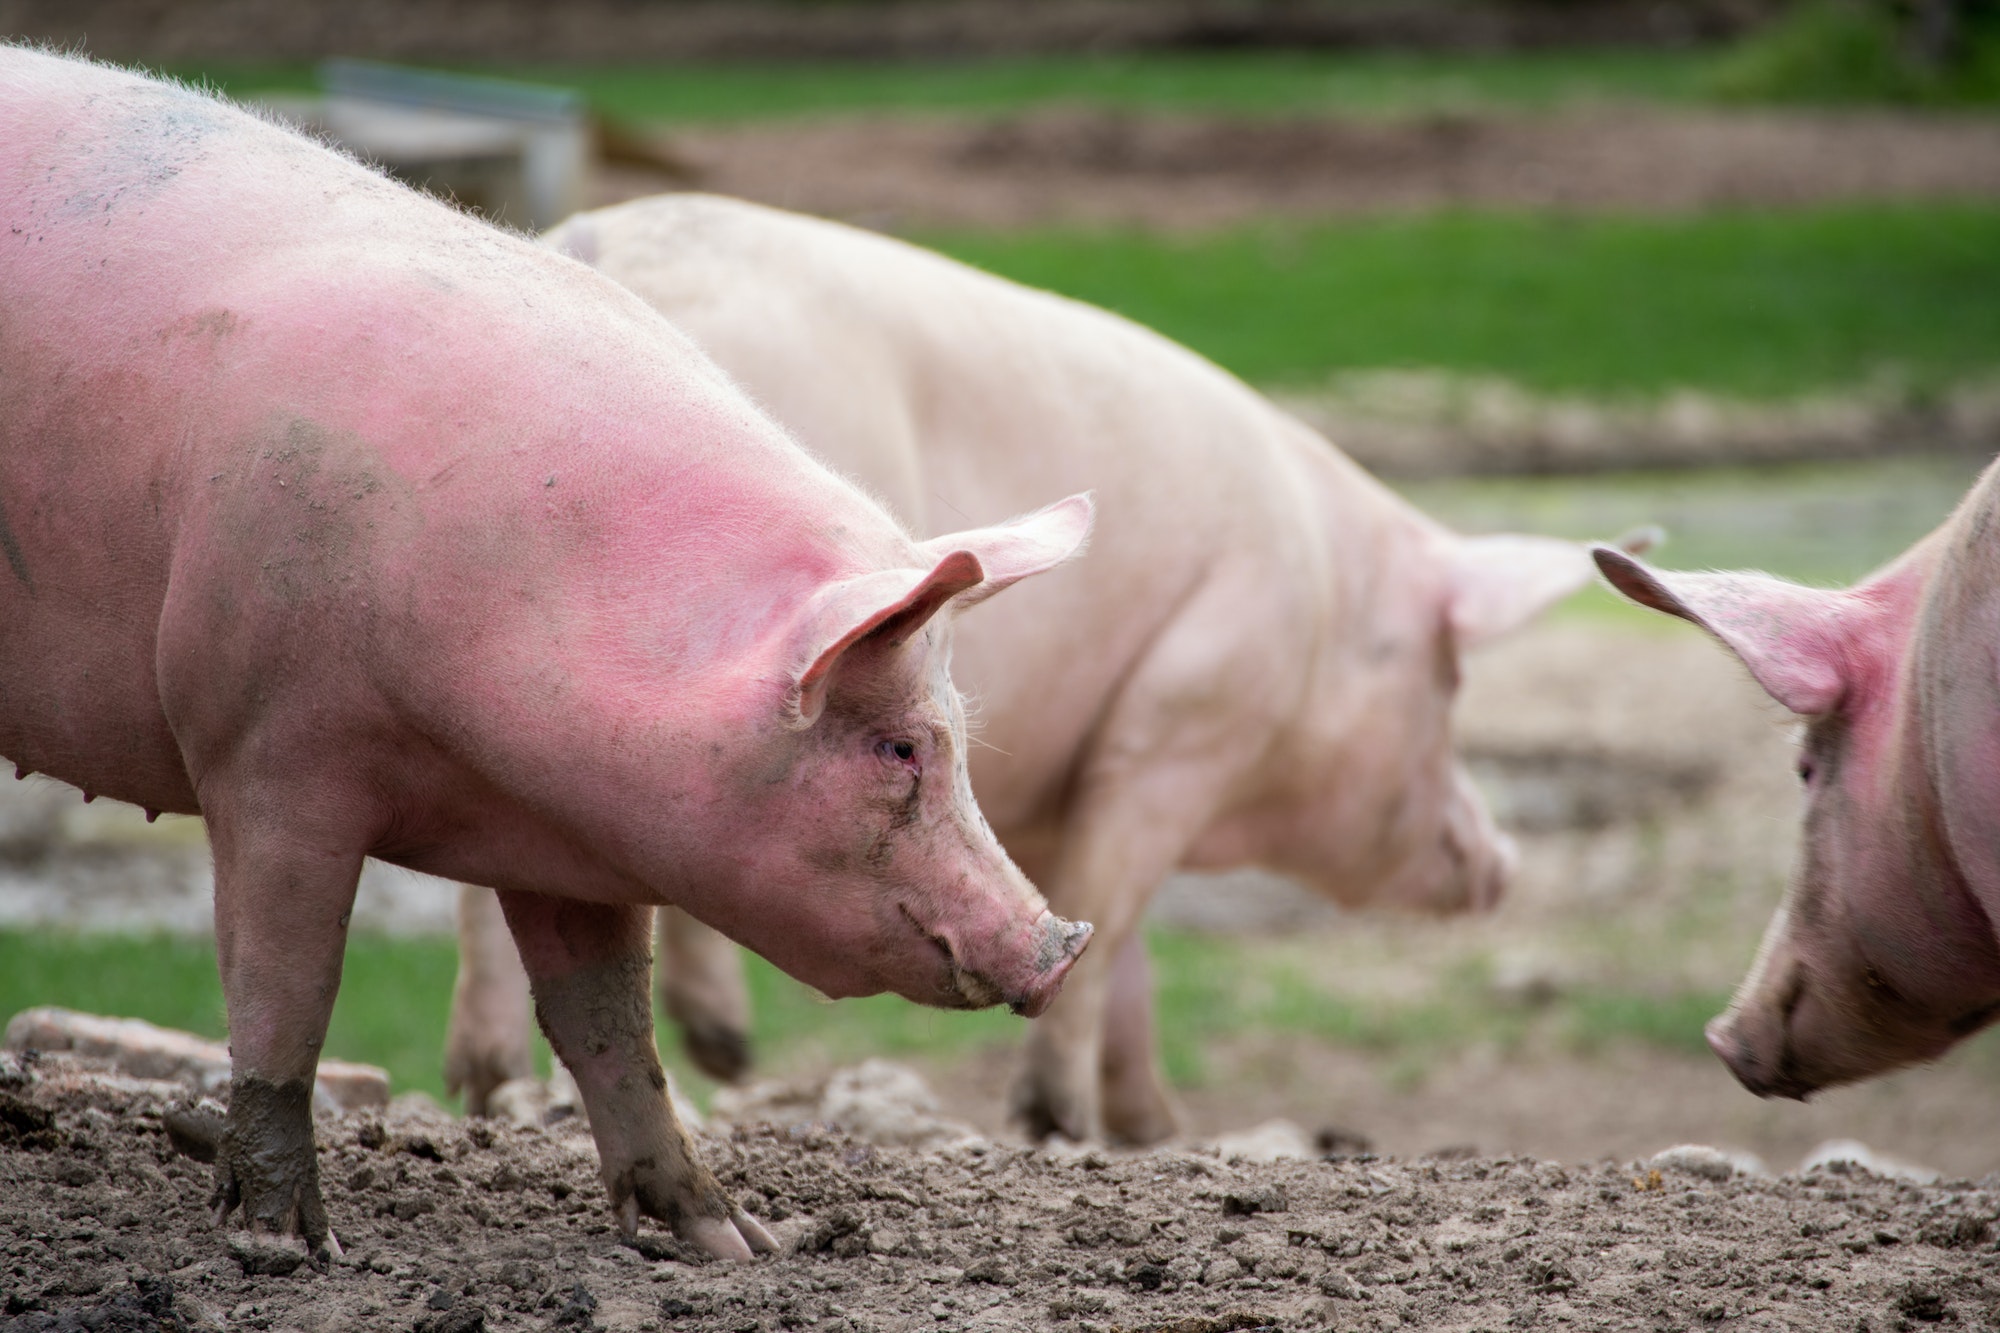 Pigs in farm